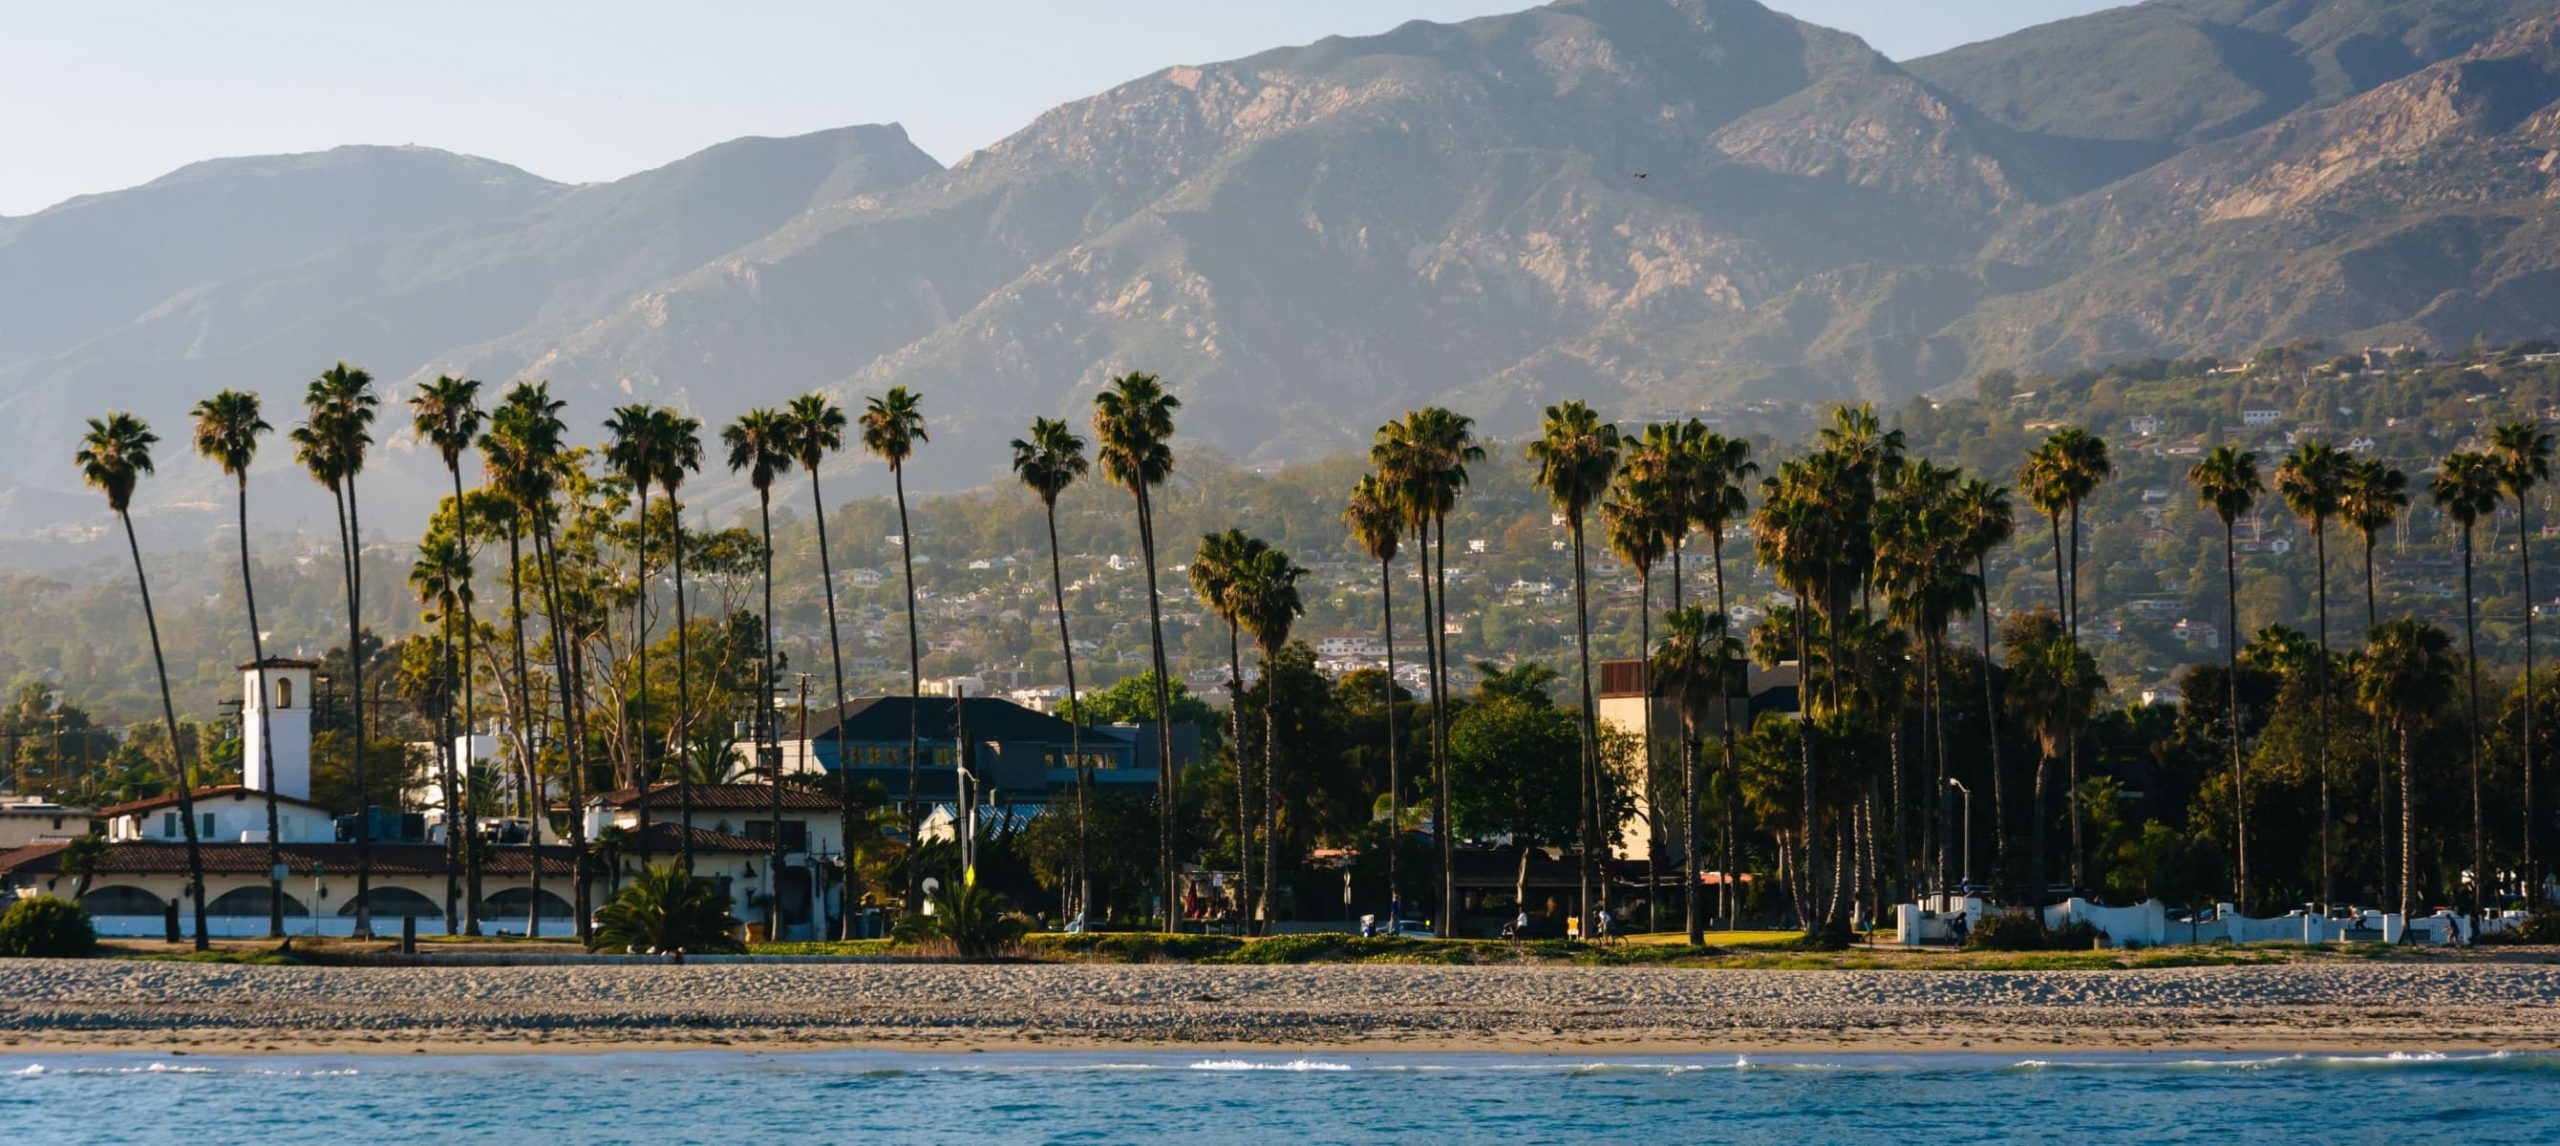 17 Bucket-List Things to do in Santa Barbara, California